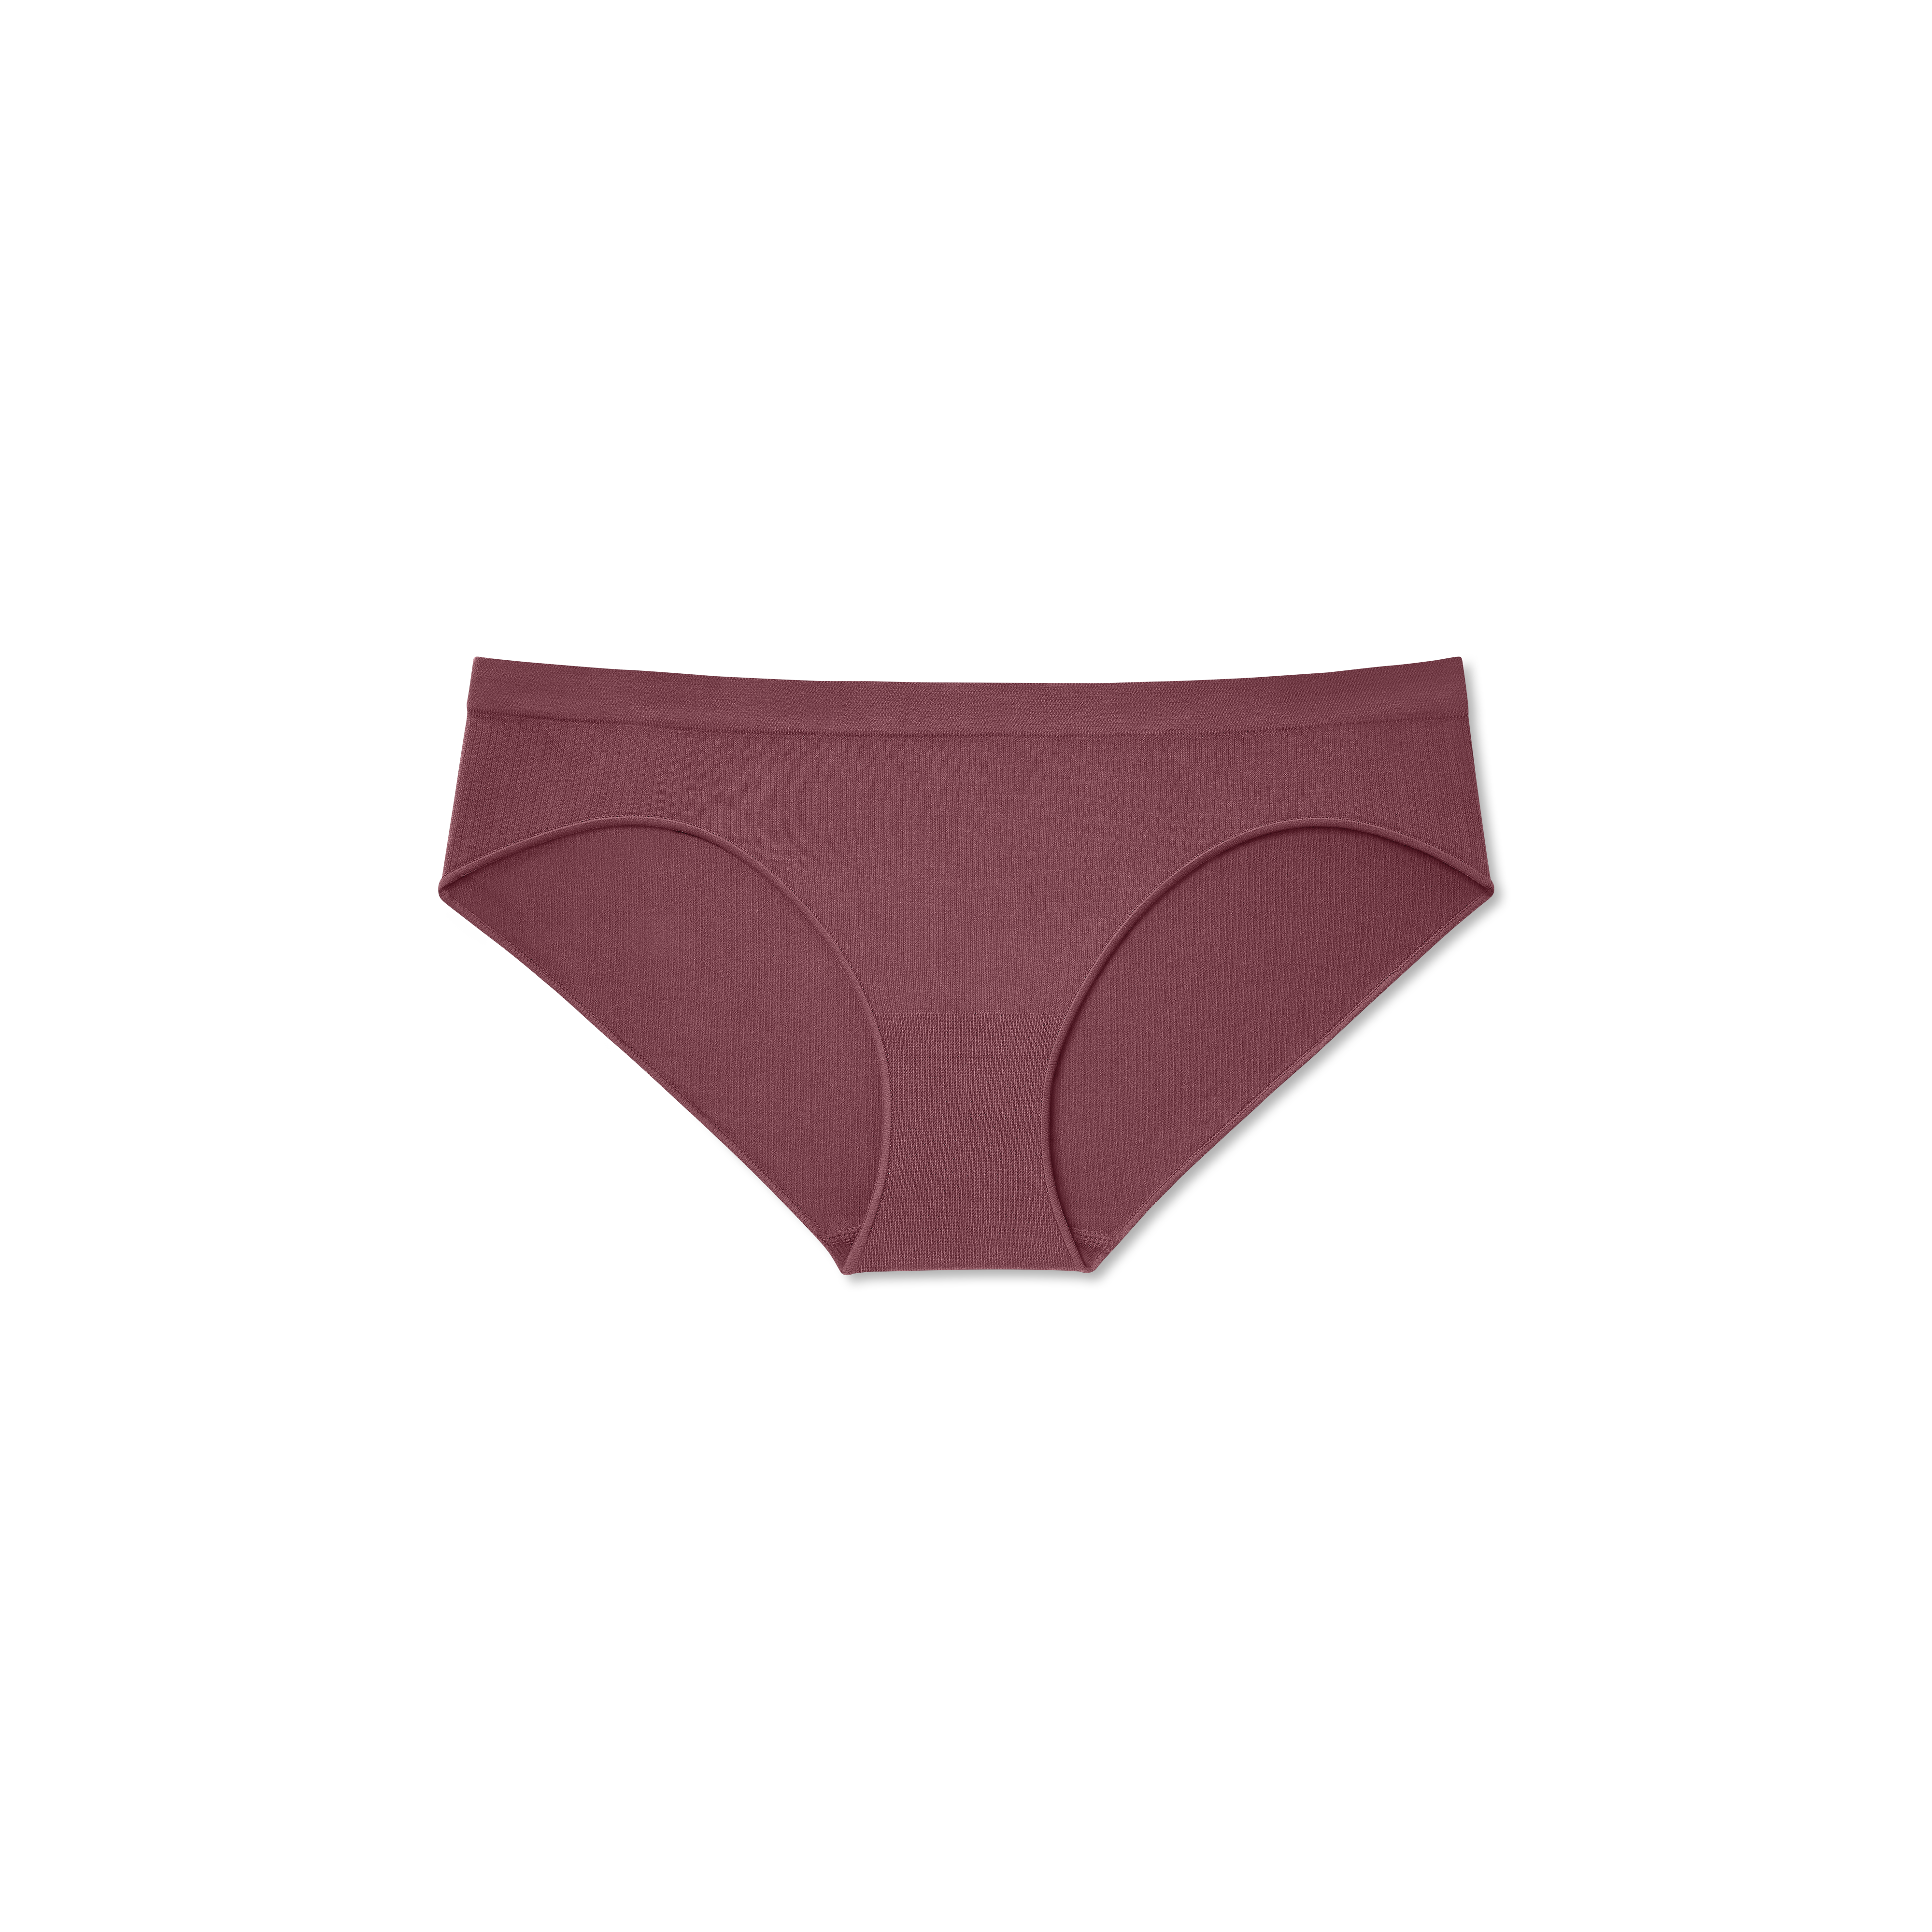 Bombas Women's Cotton Modal Blend Lace Hipster - Plus Size Underwear 6-Pack  - Spring Mix - 2X - ShopStyle Panties